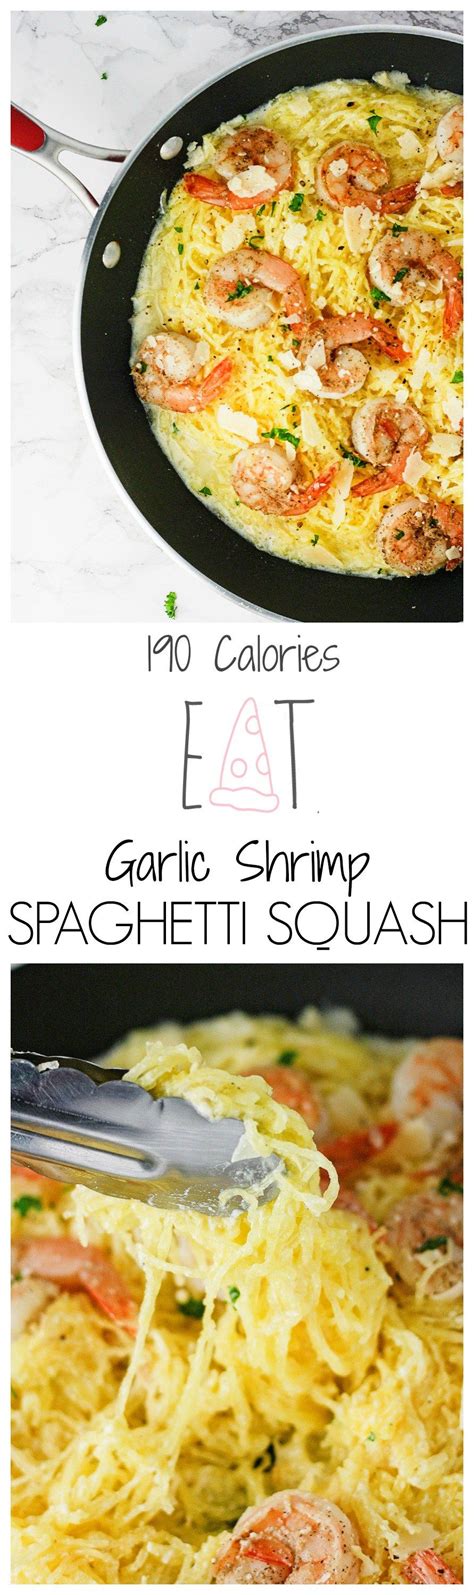 Garlic Shrimp Spaghetti Squash Its Cheat Day Everyday Recipe Low